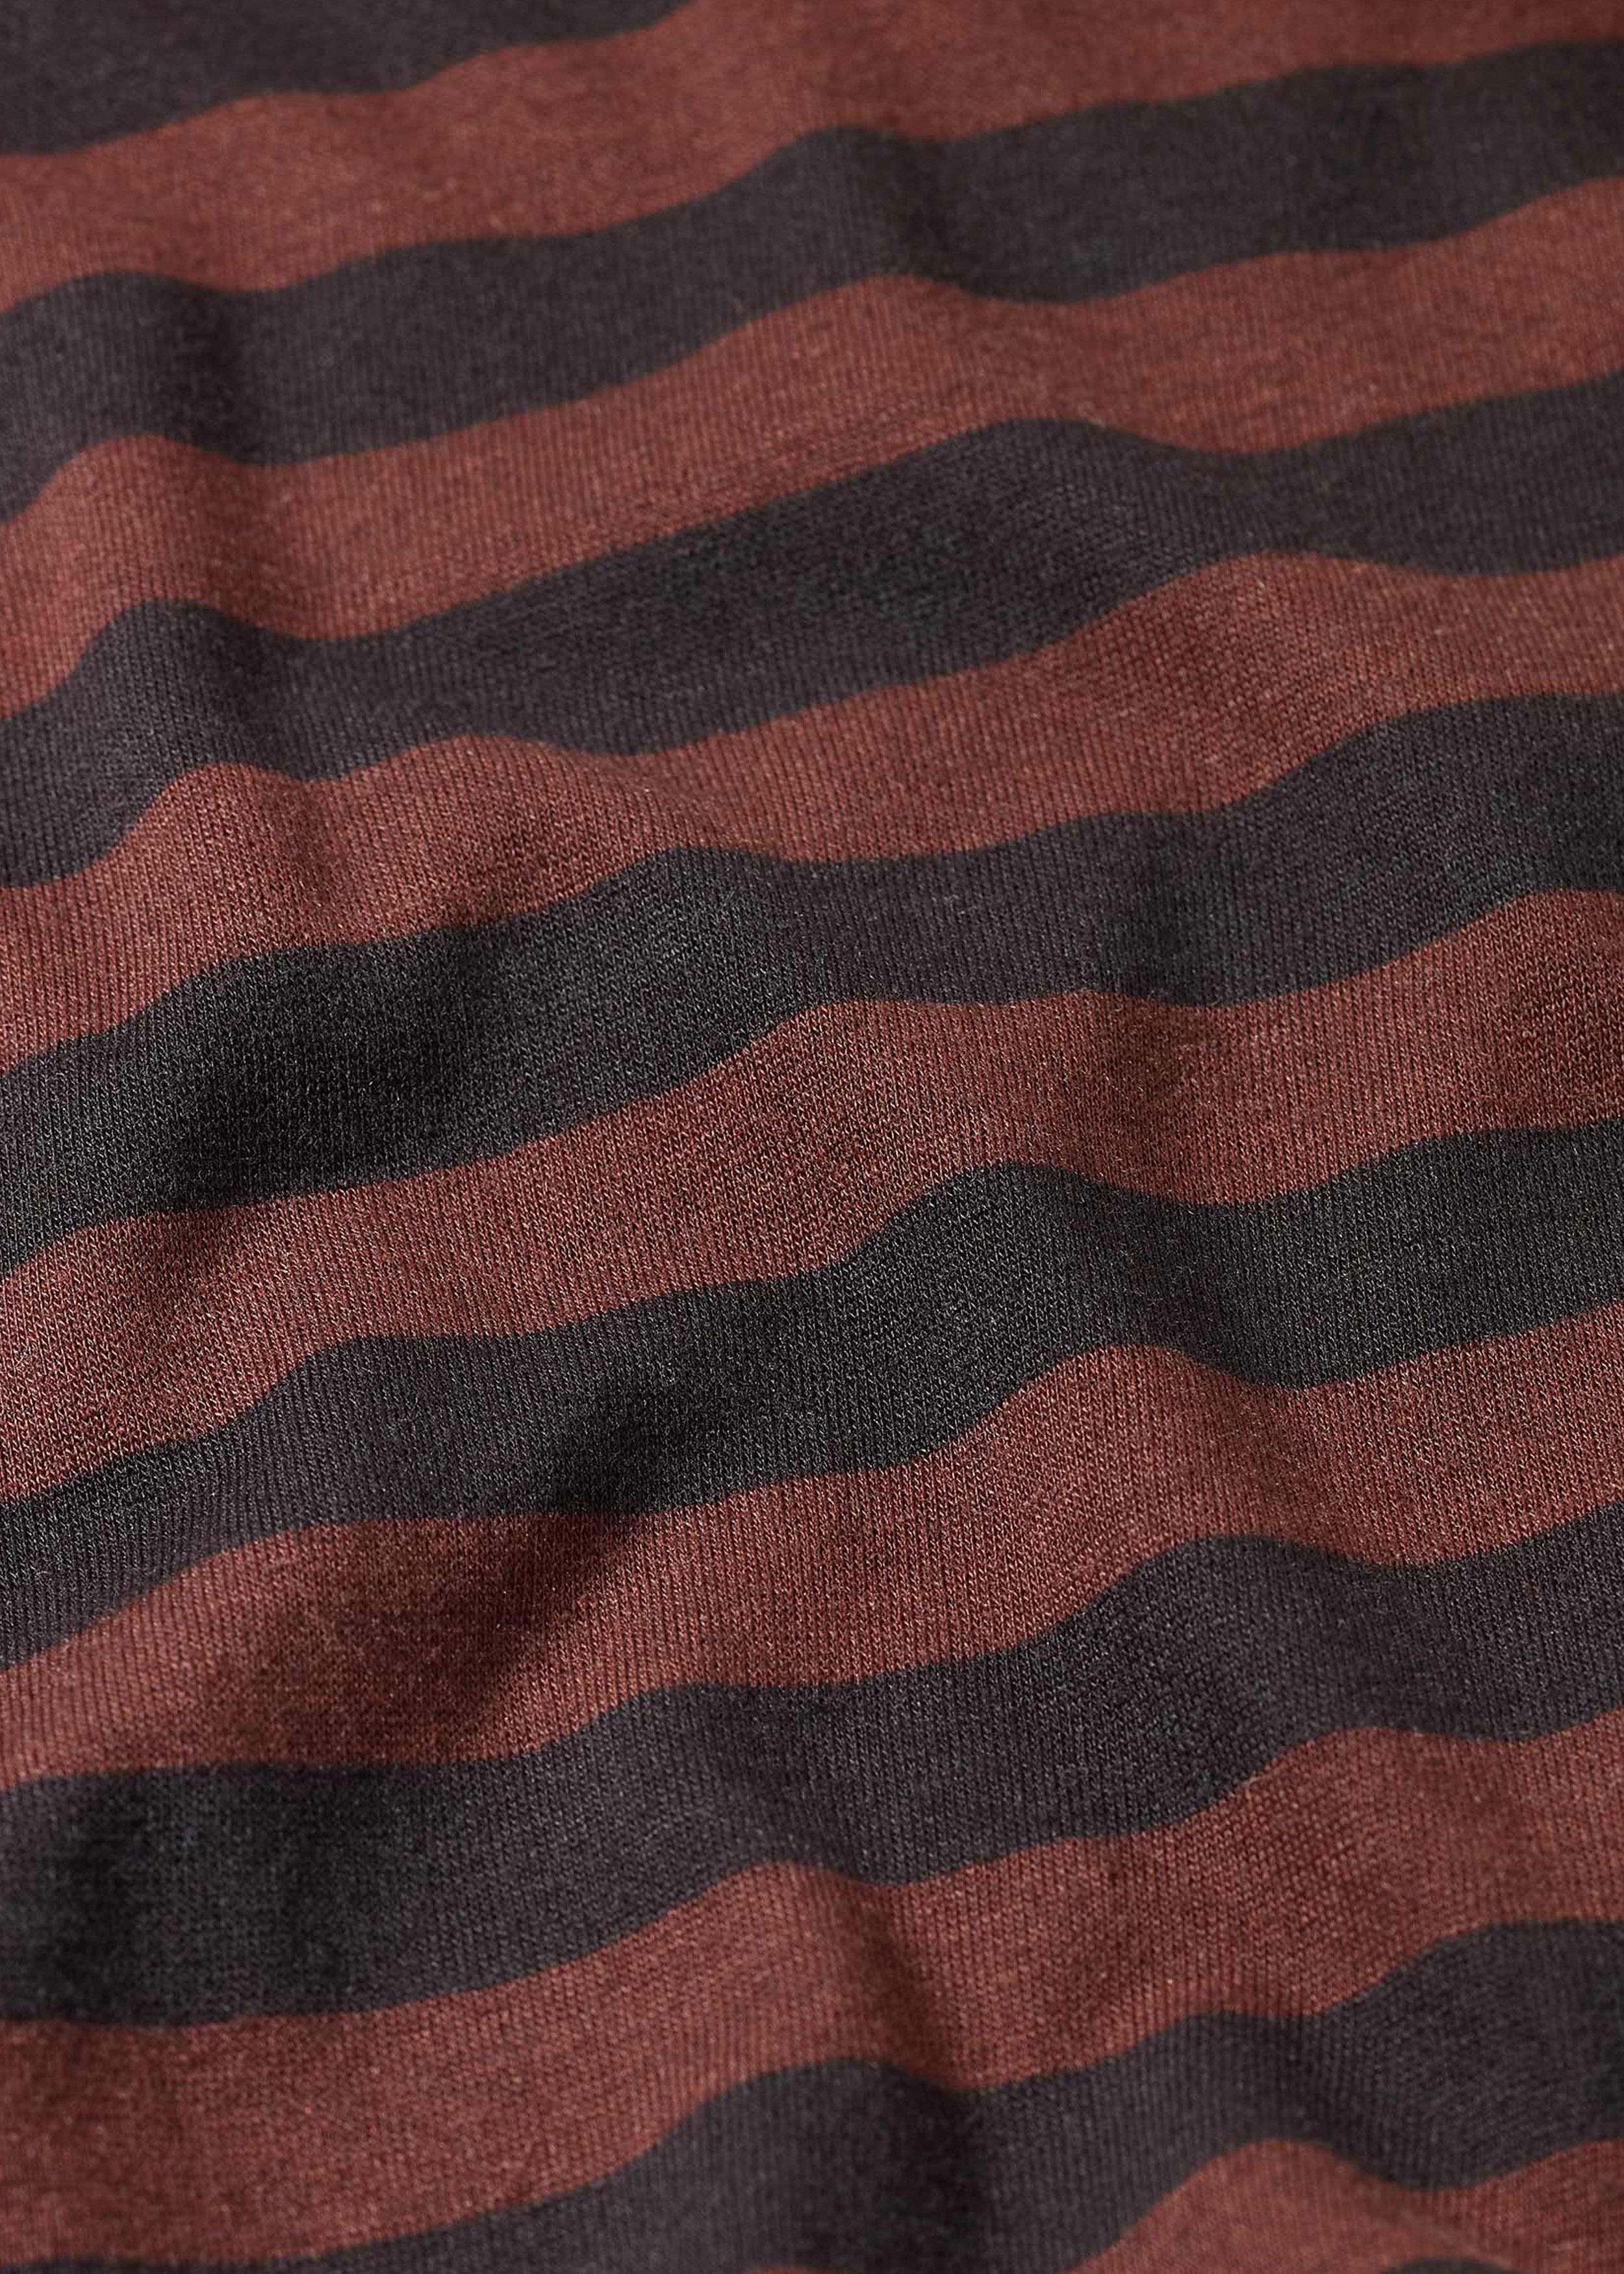 Wool Jersey Boxy Stripe Tee Black/Chestnut